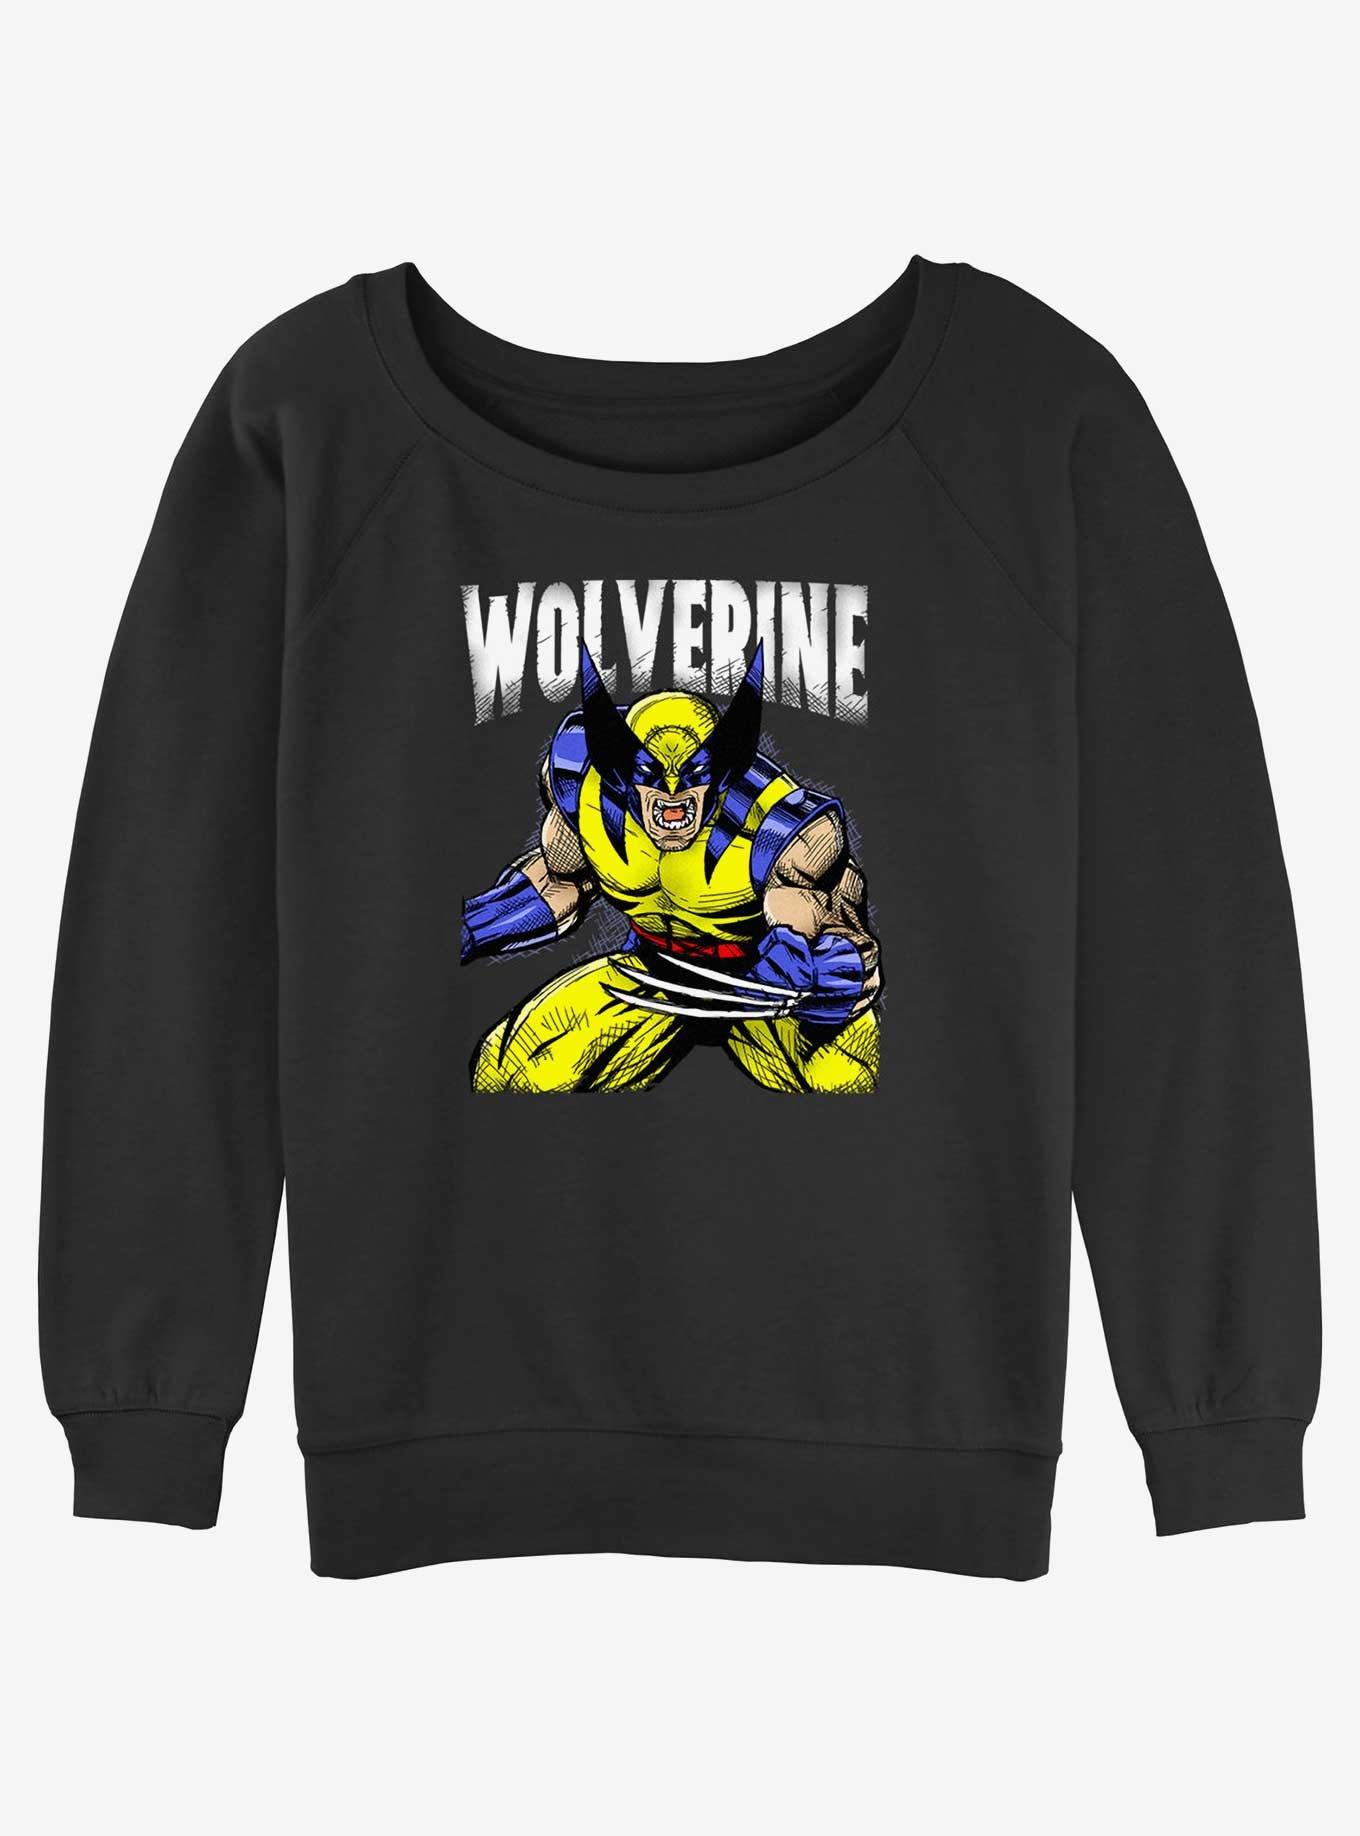 Wolverine Rage On Womens Slouchy Sweatshirt, BLACK, hi-res